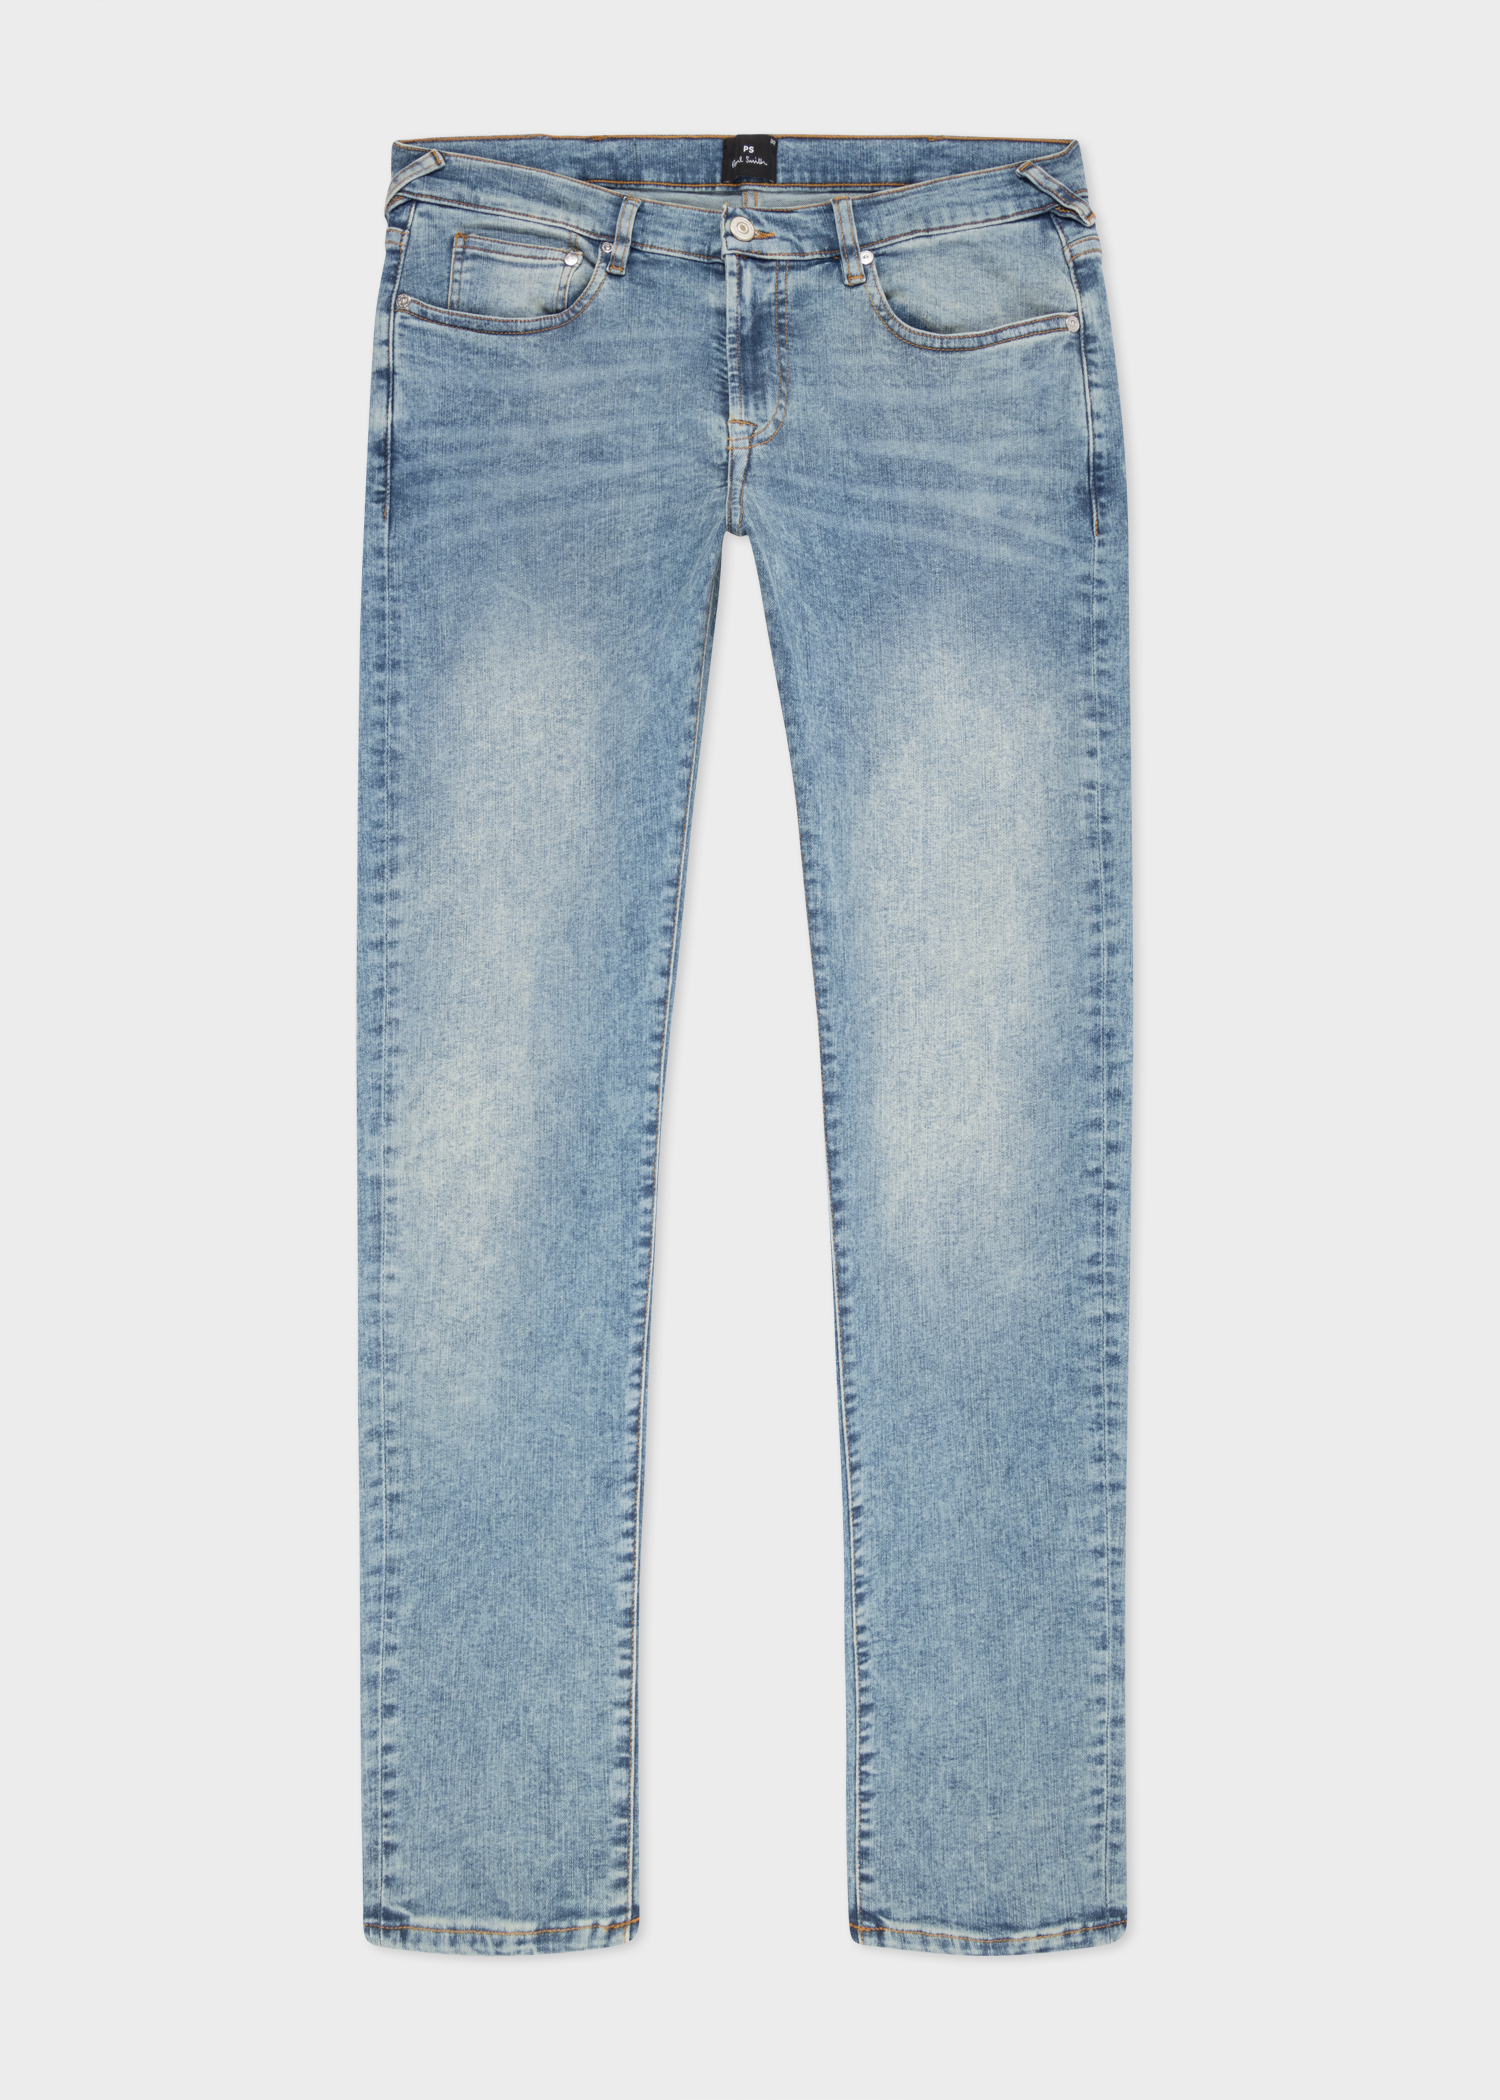 Jeans Light Wash Denim - Paul Smith Slim-Standard 13oz 'Unlucky Selvedge'  Light-Wash Denim Jeans Mens Light Wash Denim • Daniel Herran